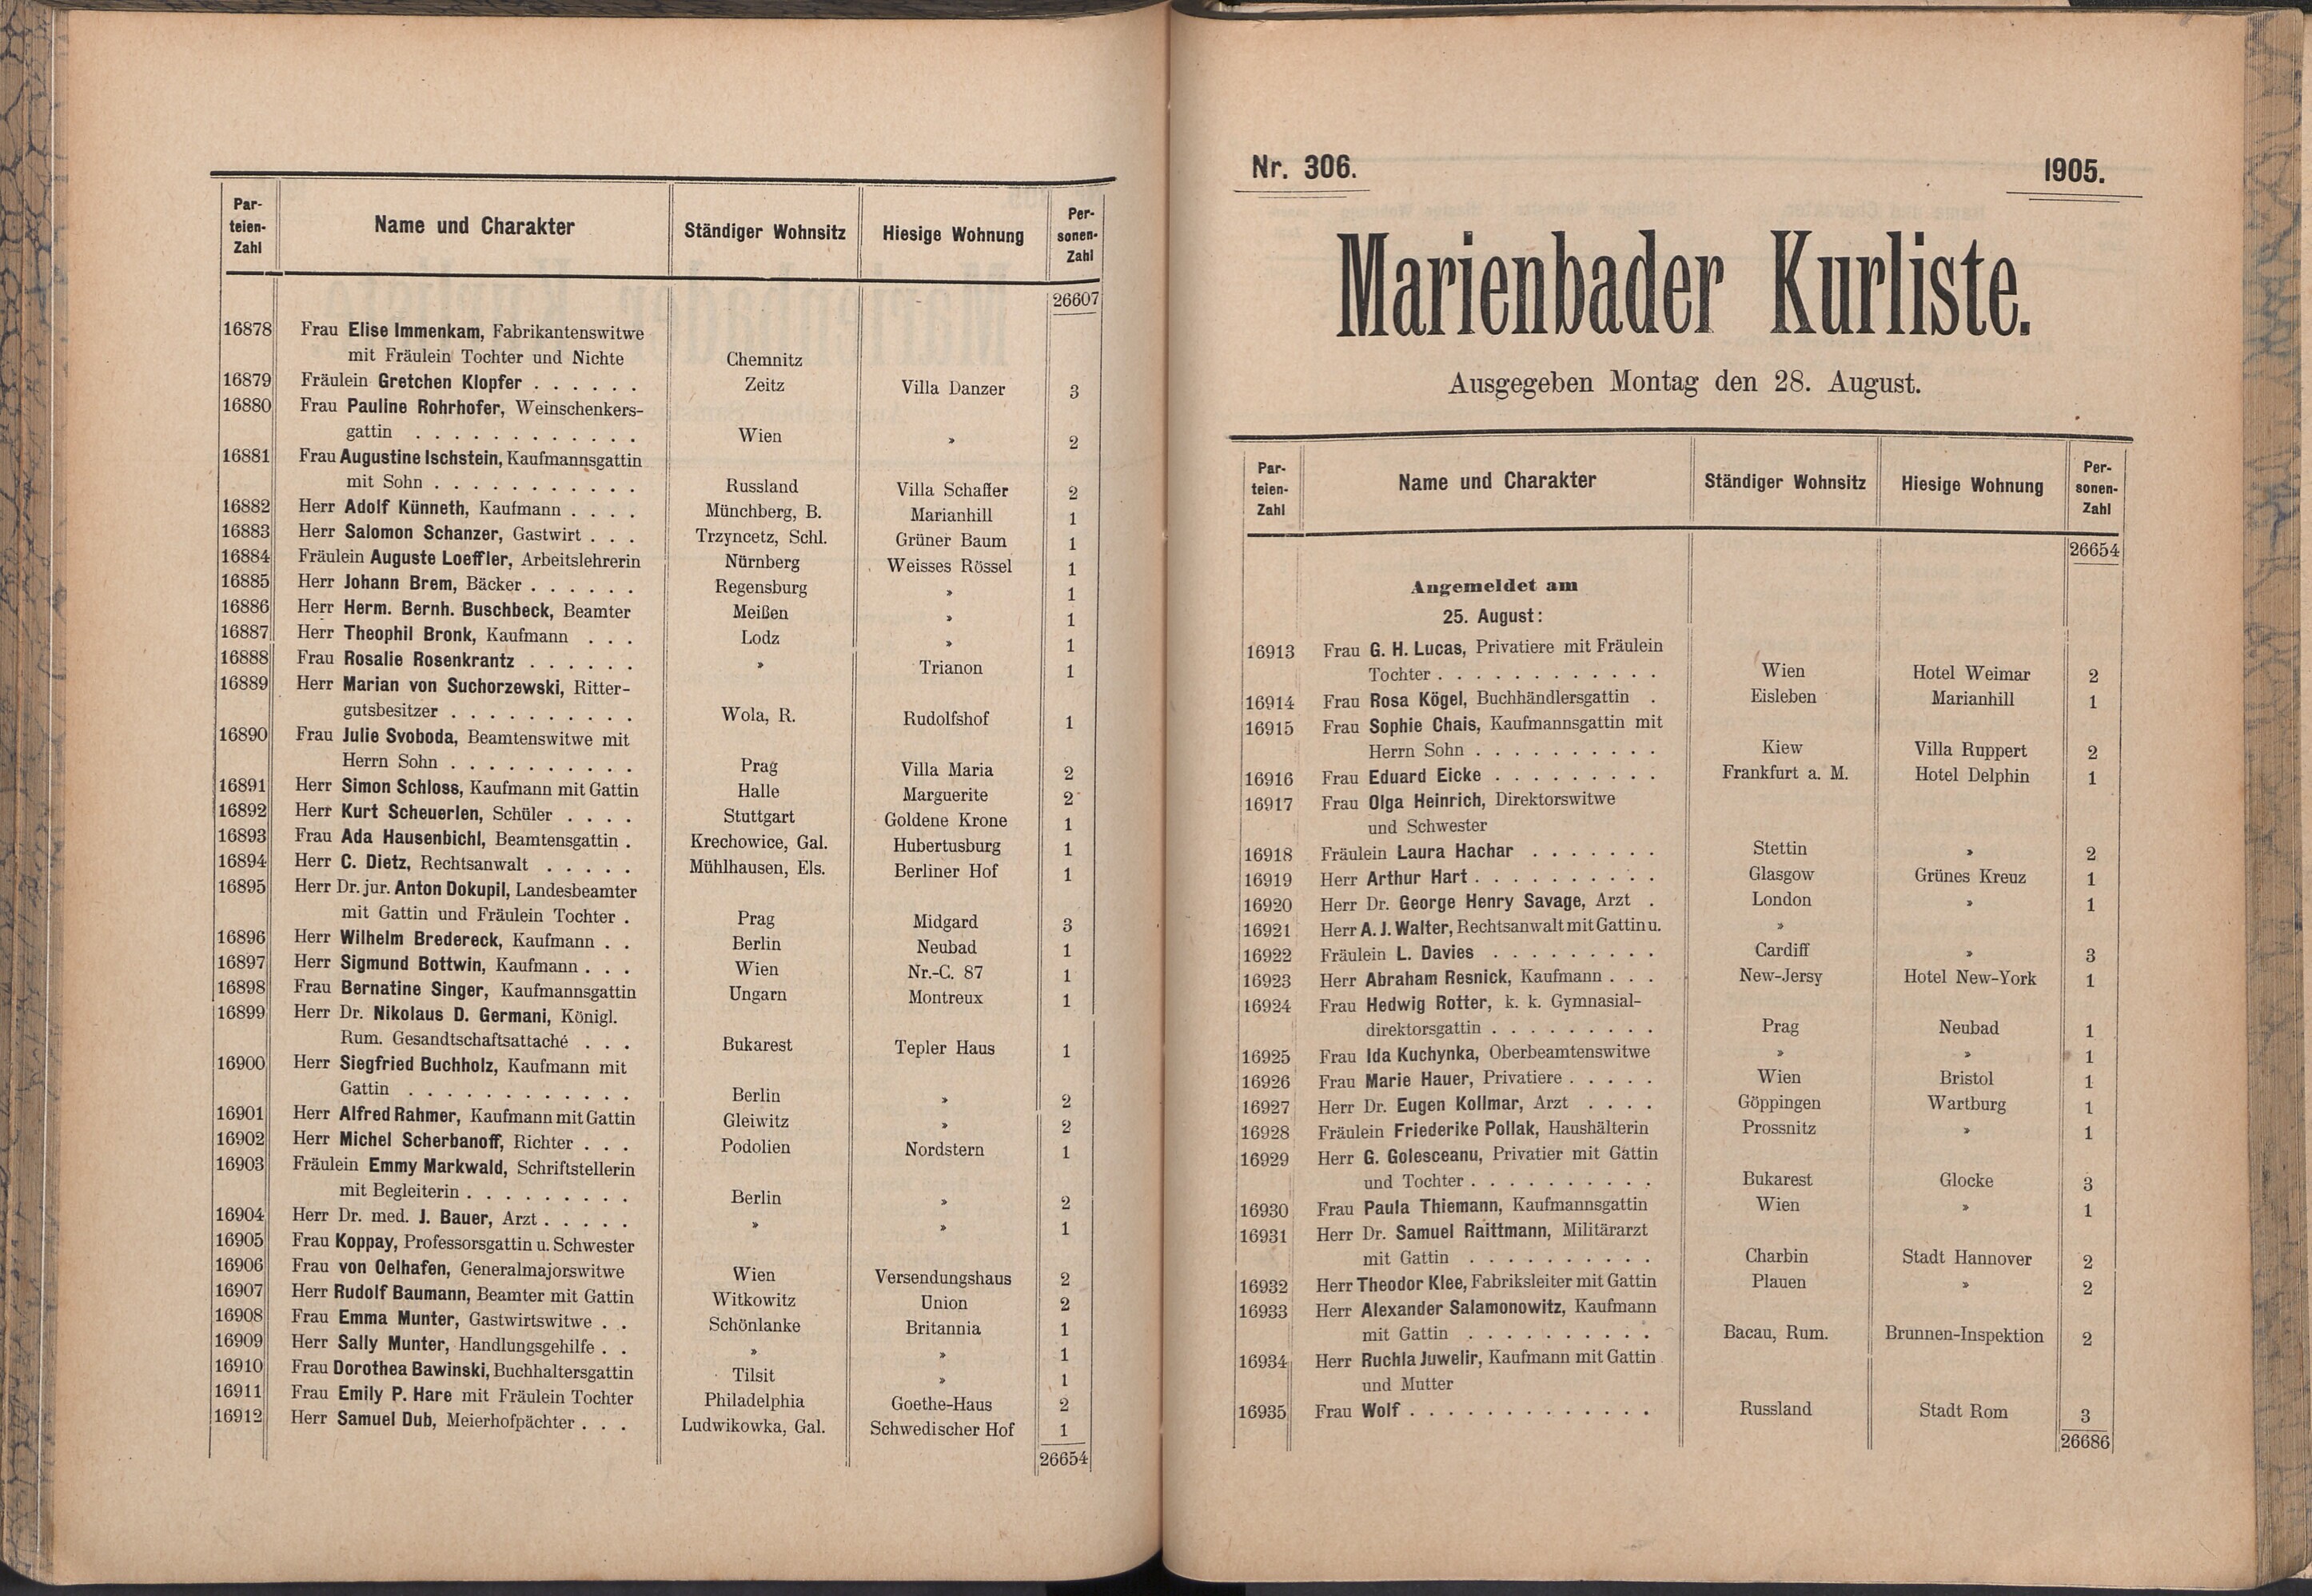 382. soap-ch_knihovna_marienbader-kurliste-1905_3820